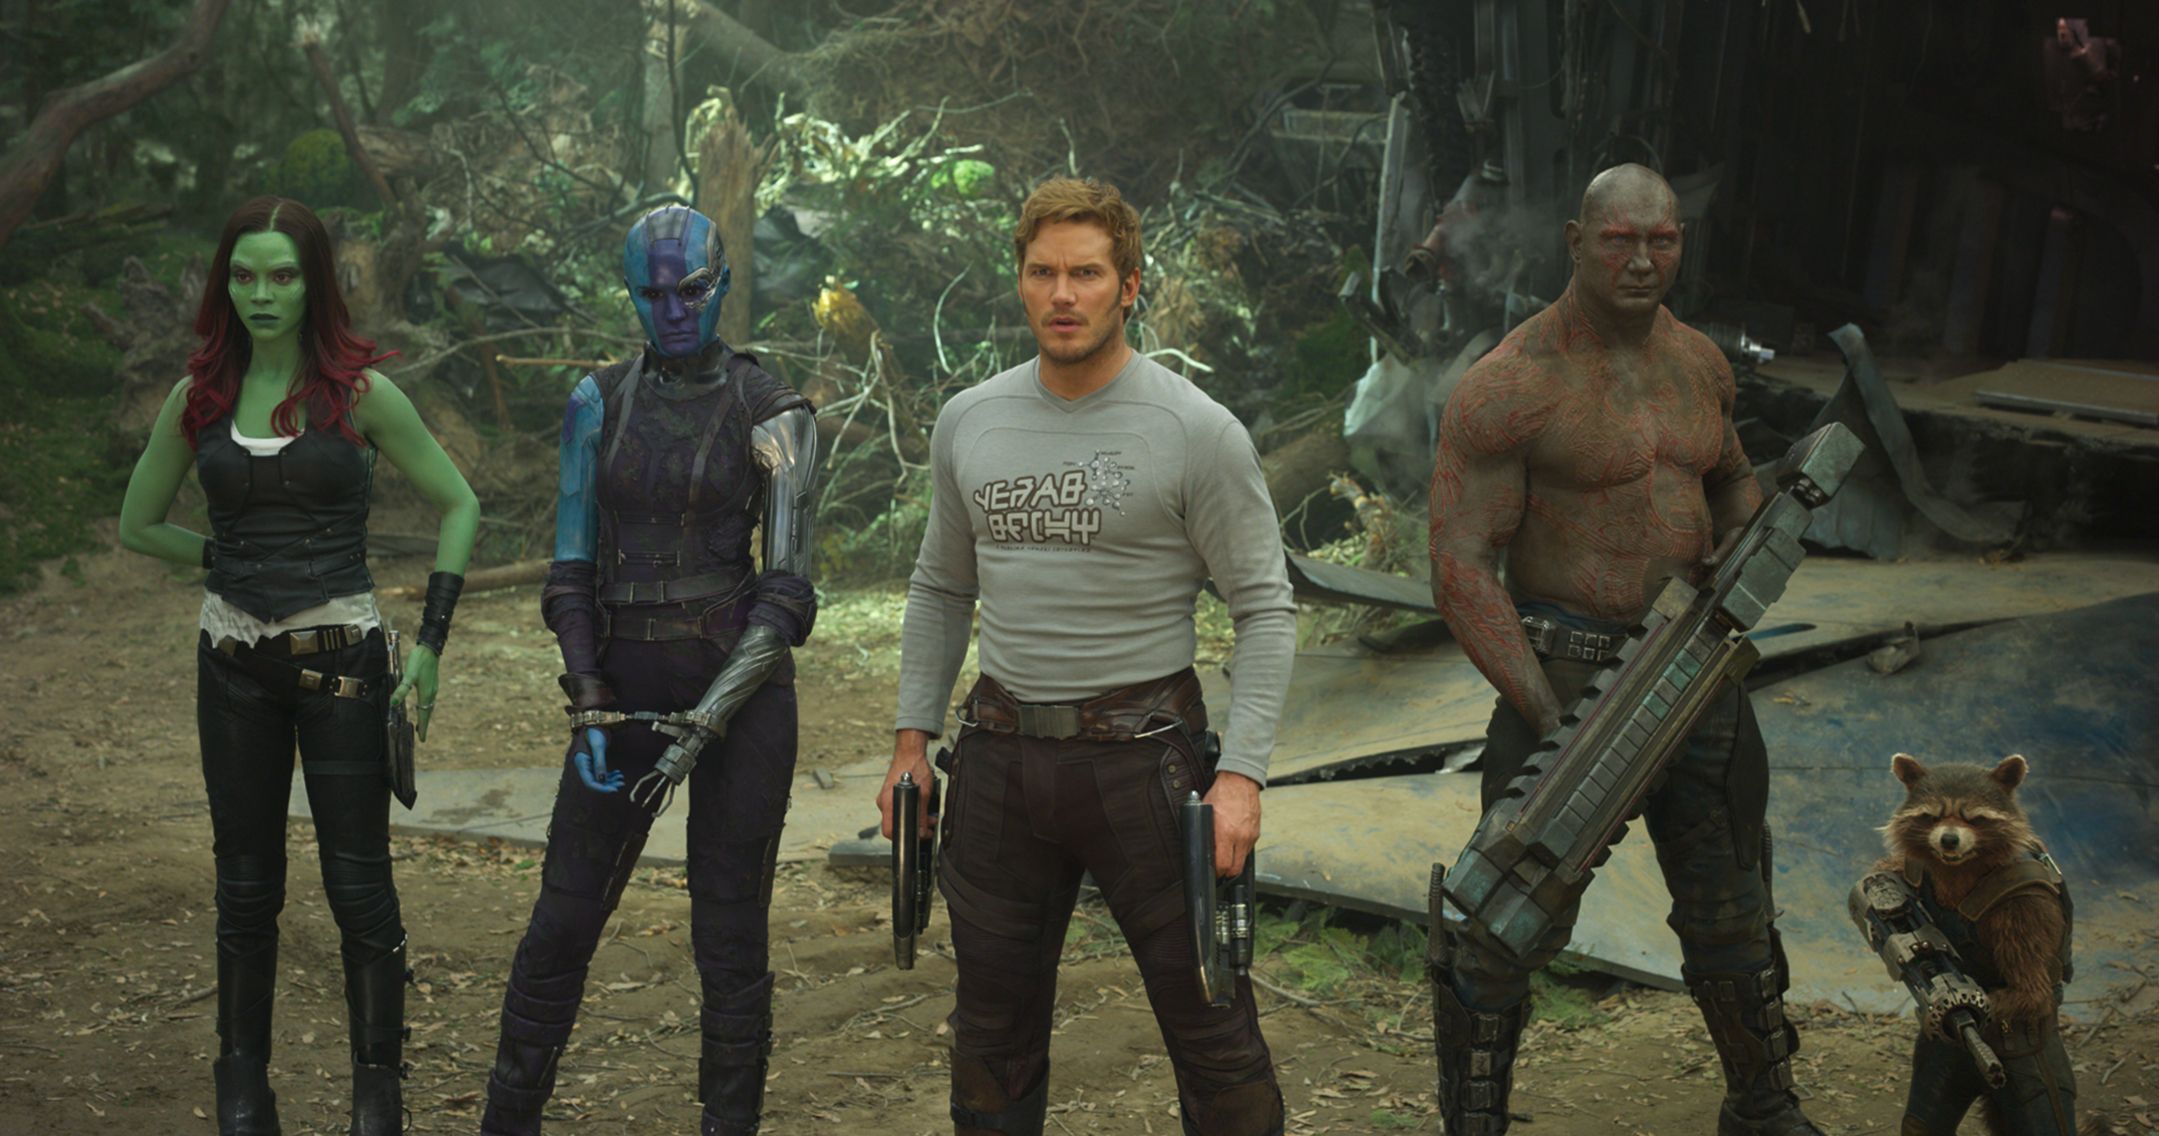 'Guardians of the Galaxy Vol. 2' Chris Pratt, Zoe Saldana and the